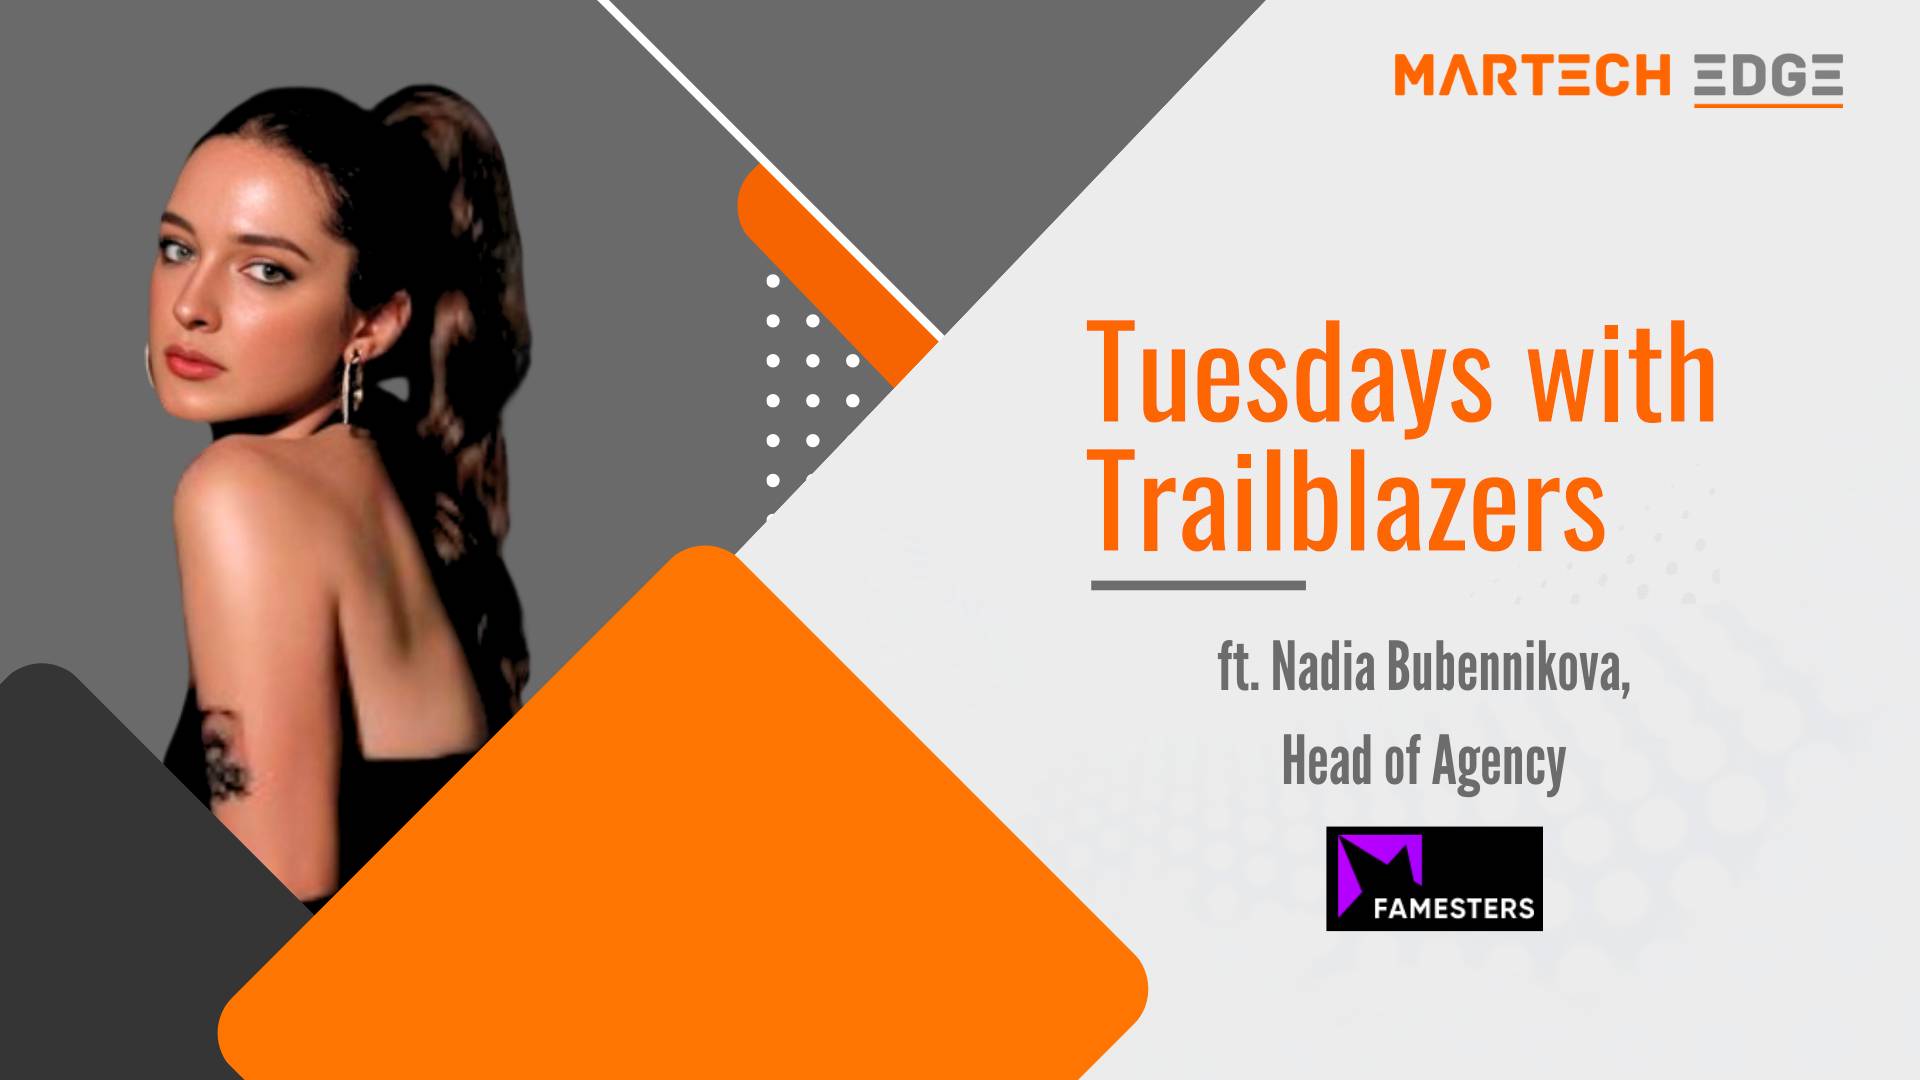  Tuesdays with Trailblazers ft. Nadia Bubennikova, Head of Agency at Famesters